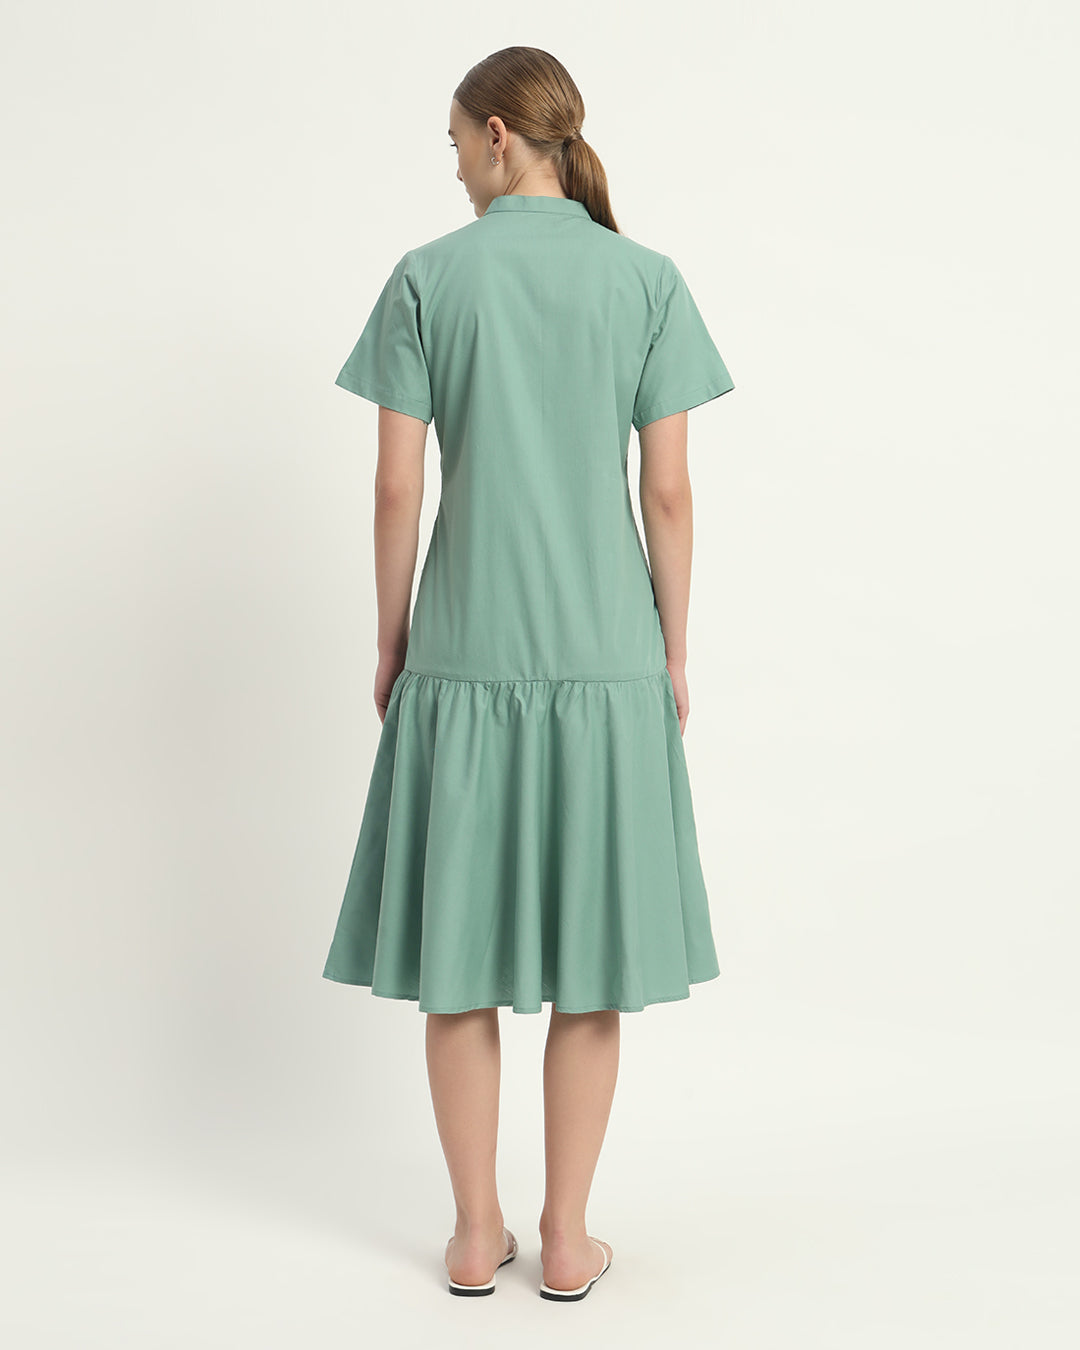 The Melrose Mint Cotton Dress